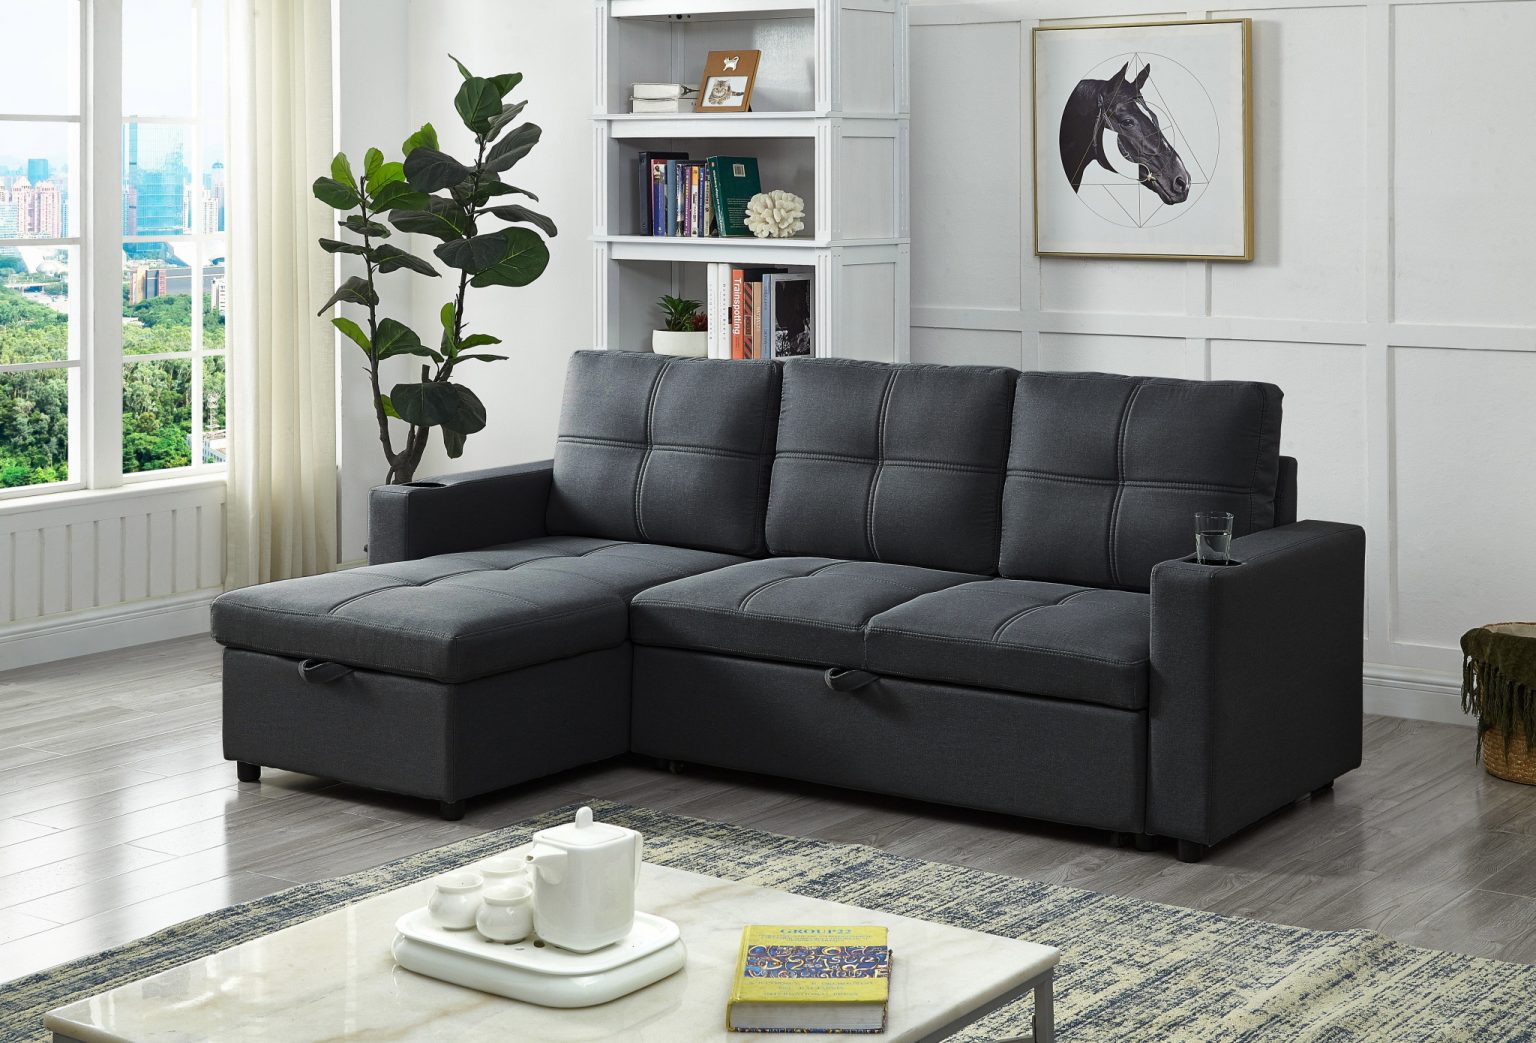 Harper Sofa Bed Sectional ️ Shop Modern Sectional Sofas Online